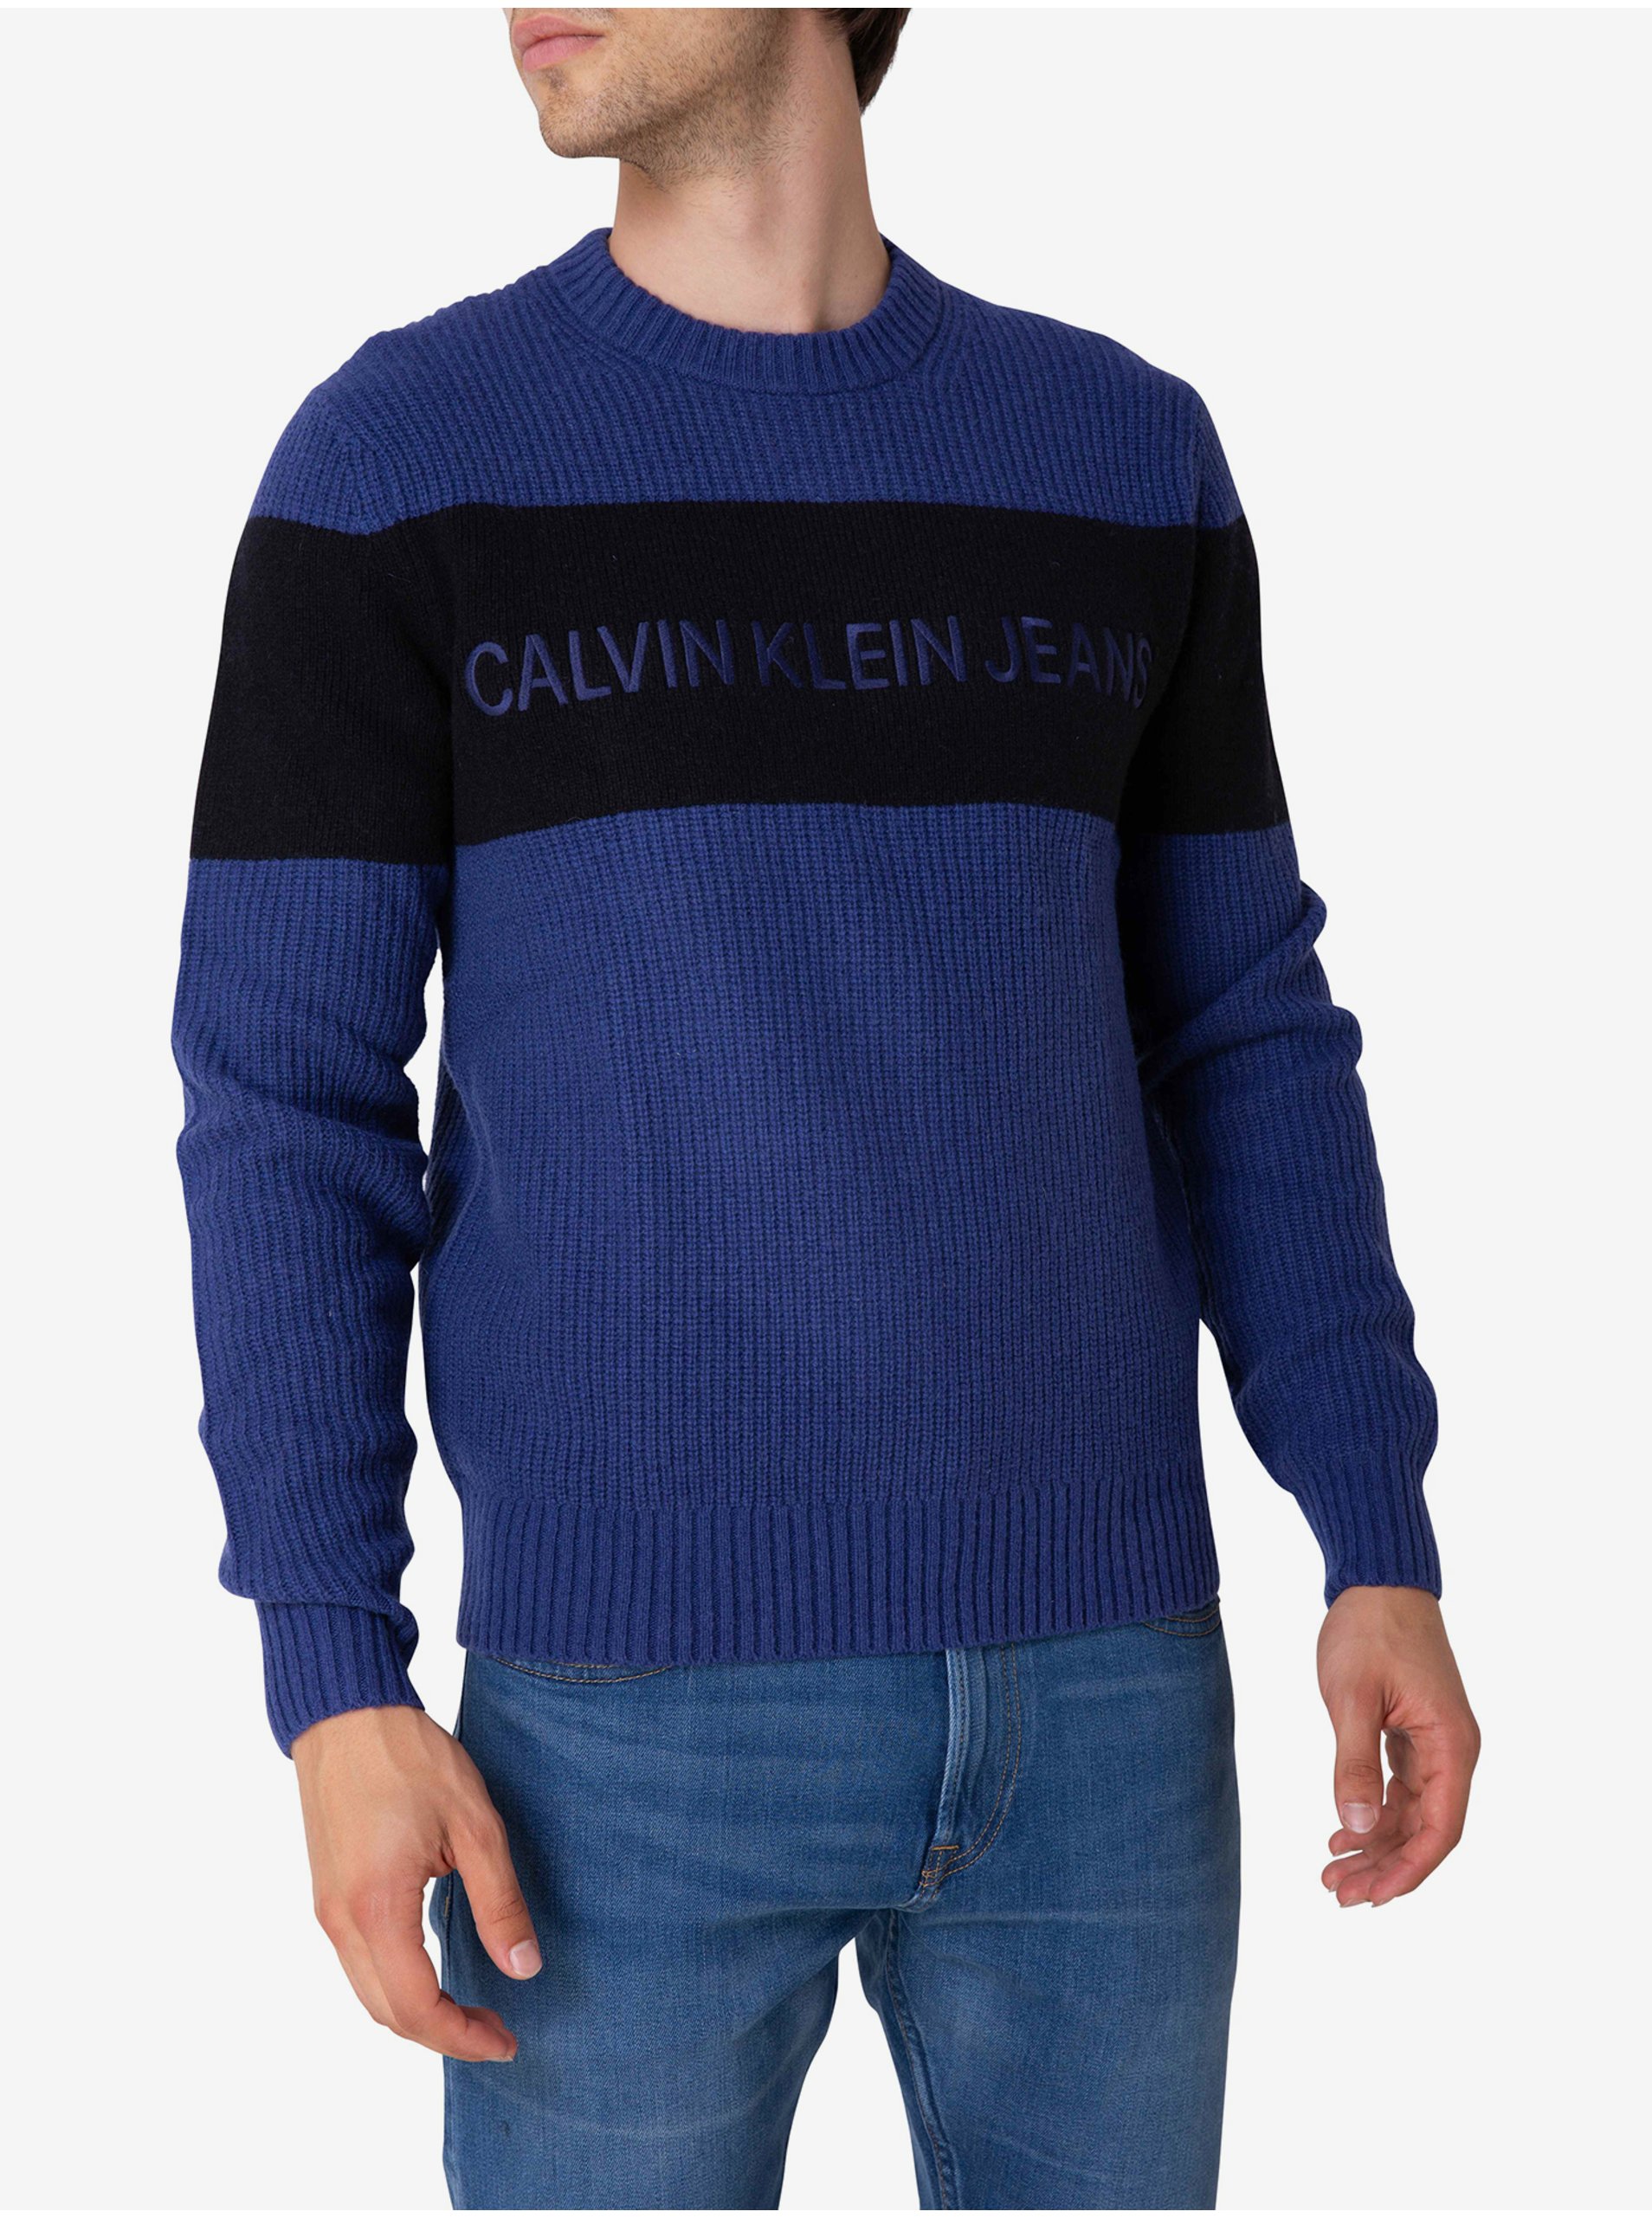 Lacno Černo-modrý pánský vlněný svetr Calvin Klein Jeans